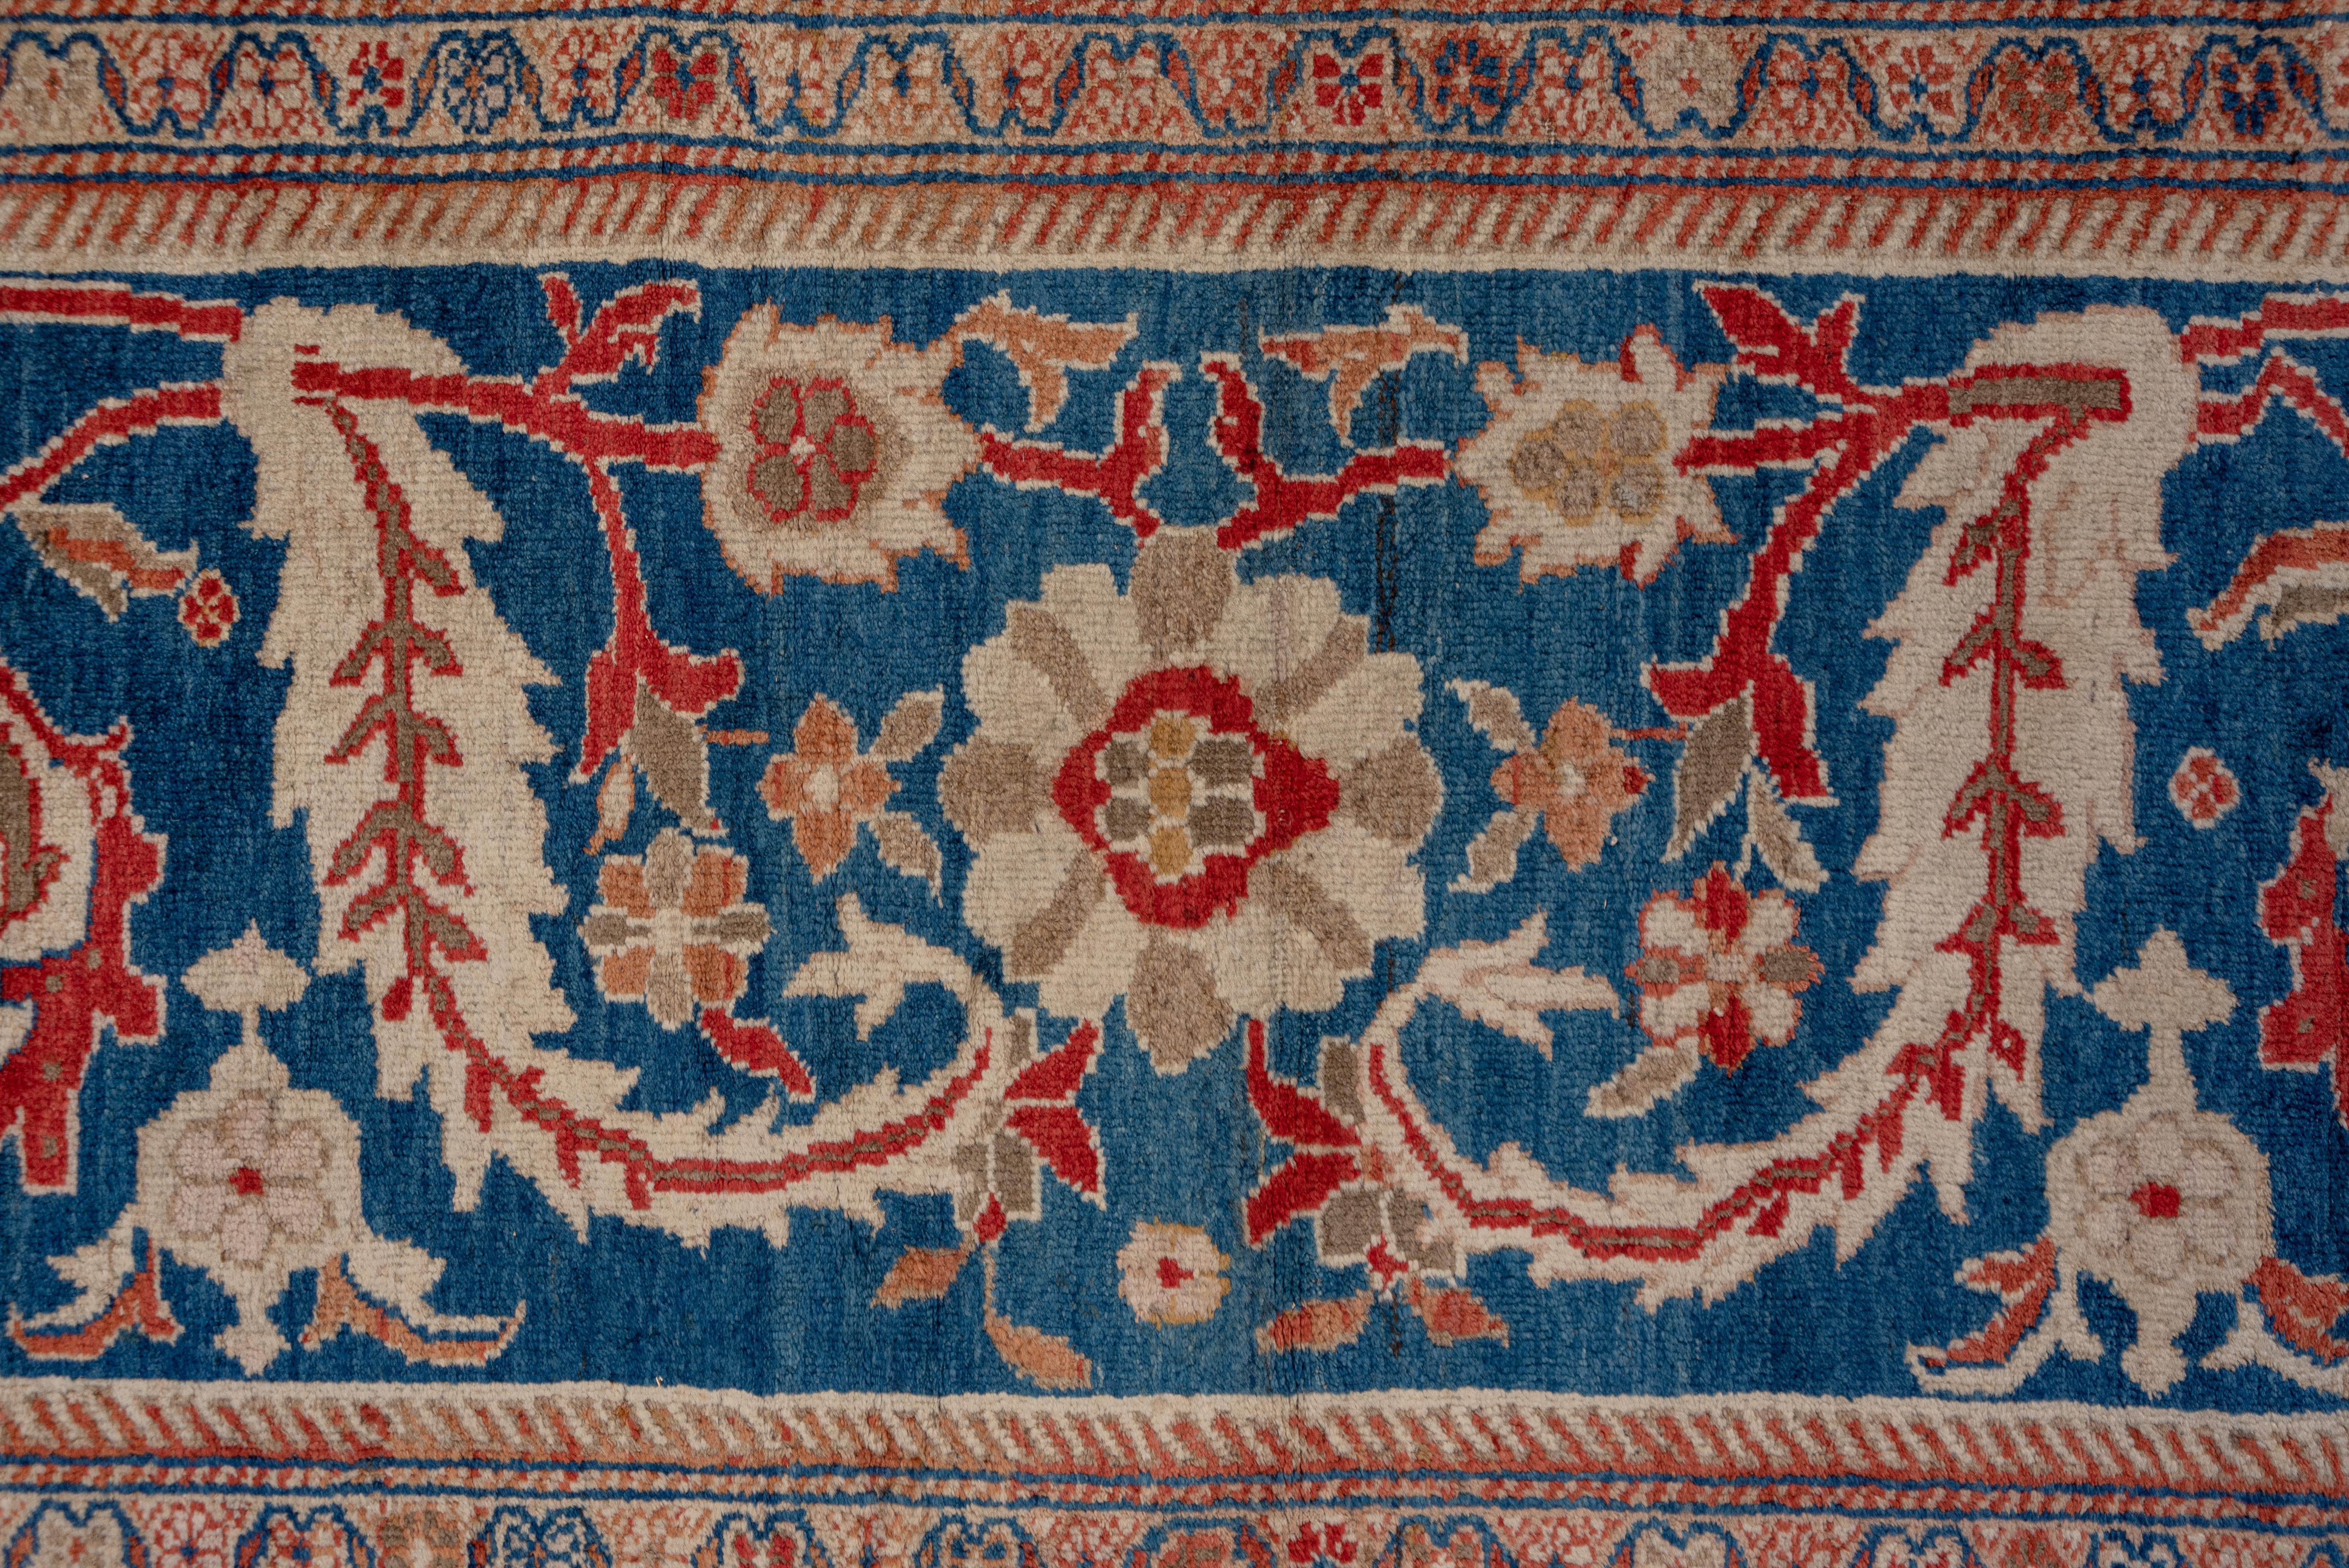 19th Century Magnificent Antique Persian Sultanabad Carpet, Bright Orange & Red Allover Field